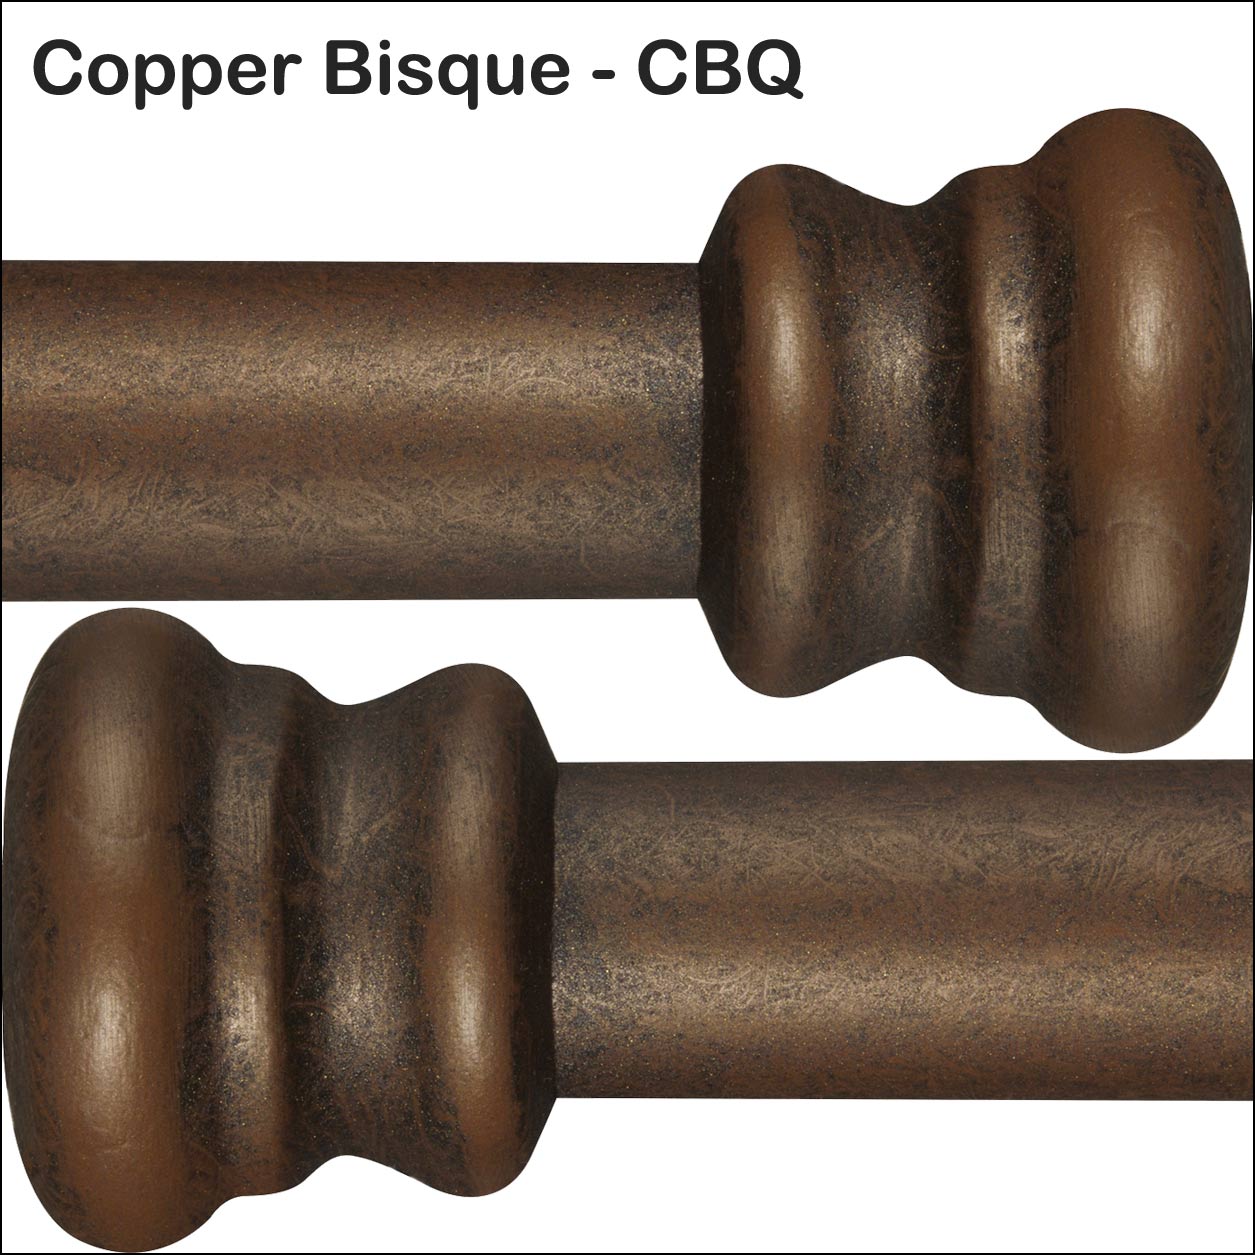 Copper Bisque CBQ Powder Coating Finish Wesley Allen Matriae